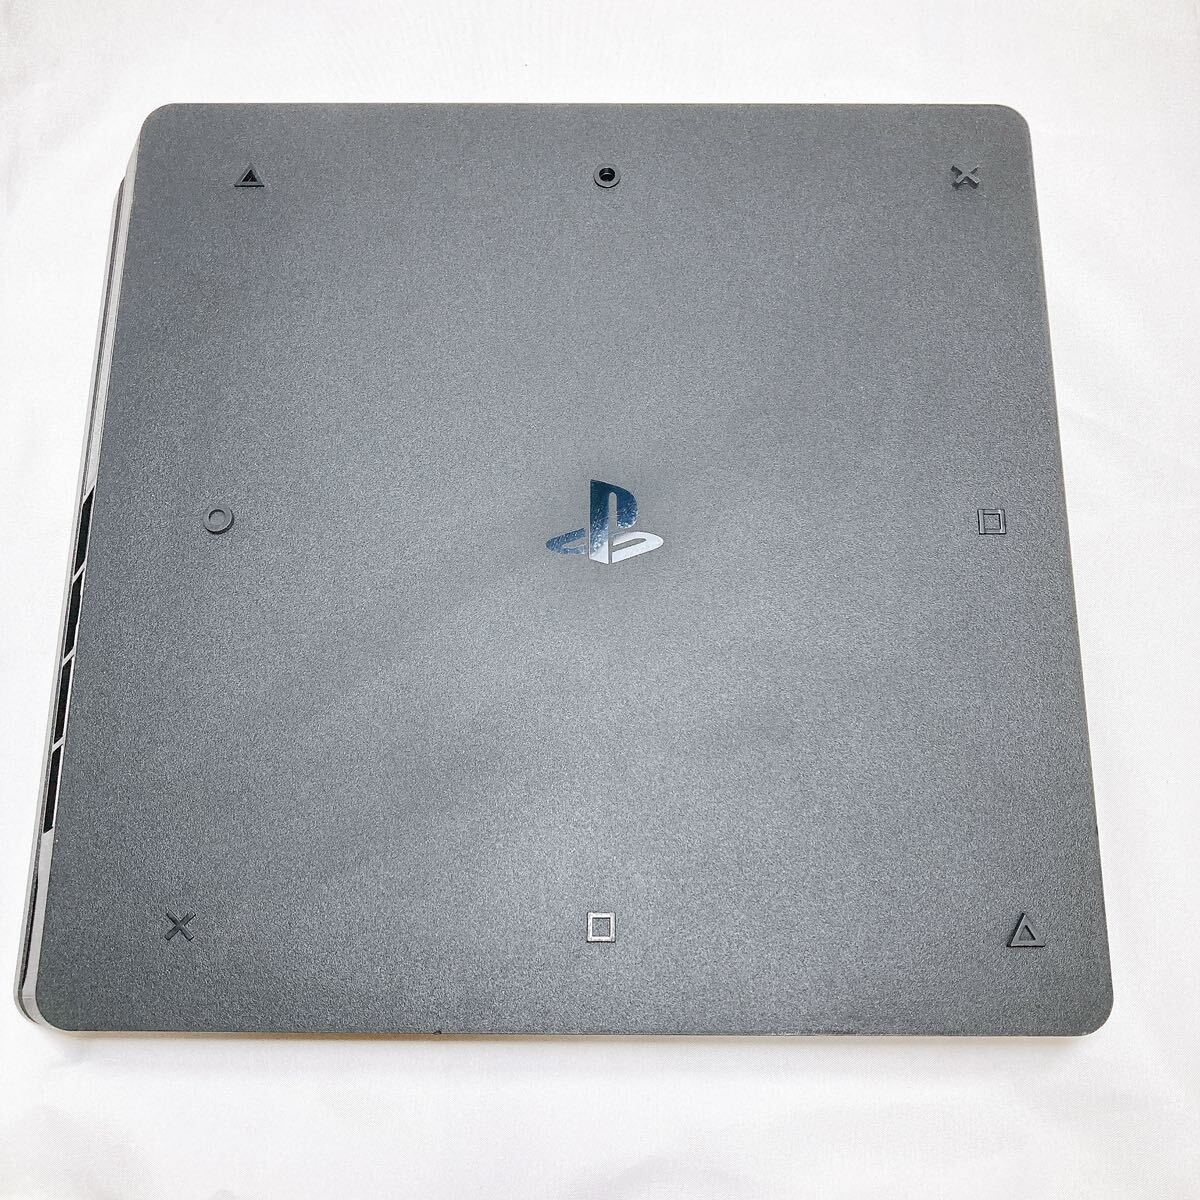 SONY PS4 CUH-2000A 500GB 本体のみ 動作確認 初期化済/ソニー プレステ4 PlayStation4 プレイステーション4 薄型 ジェット ブラック 